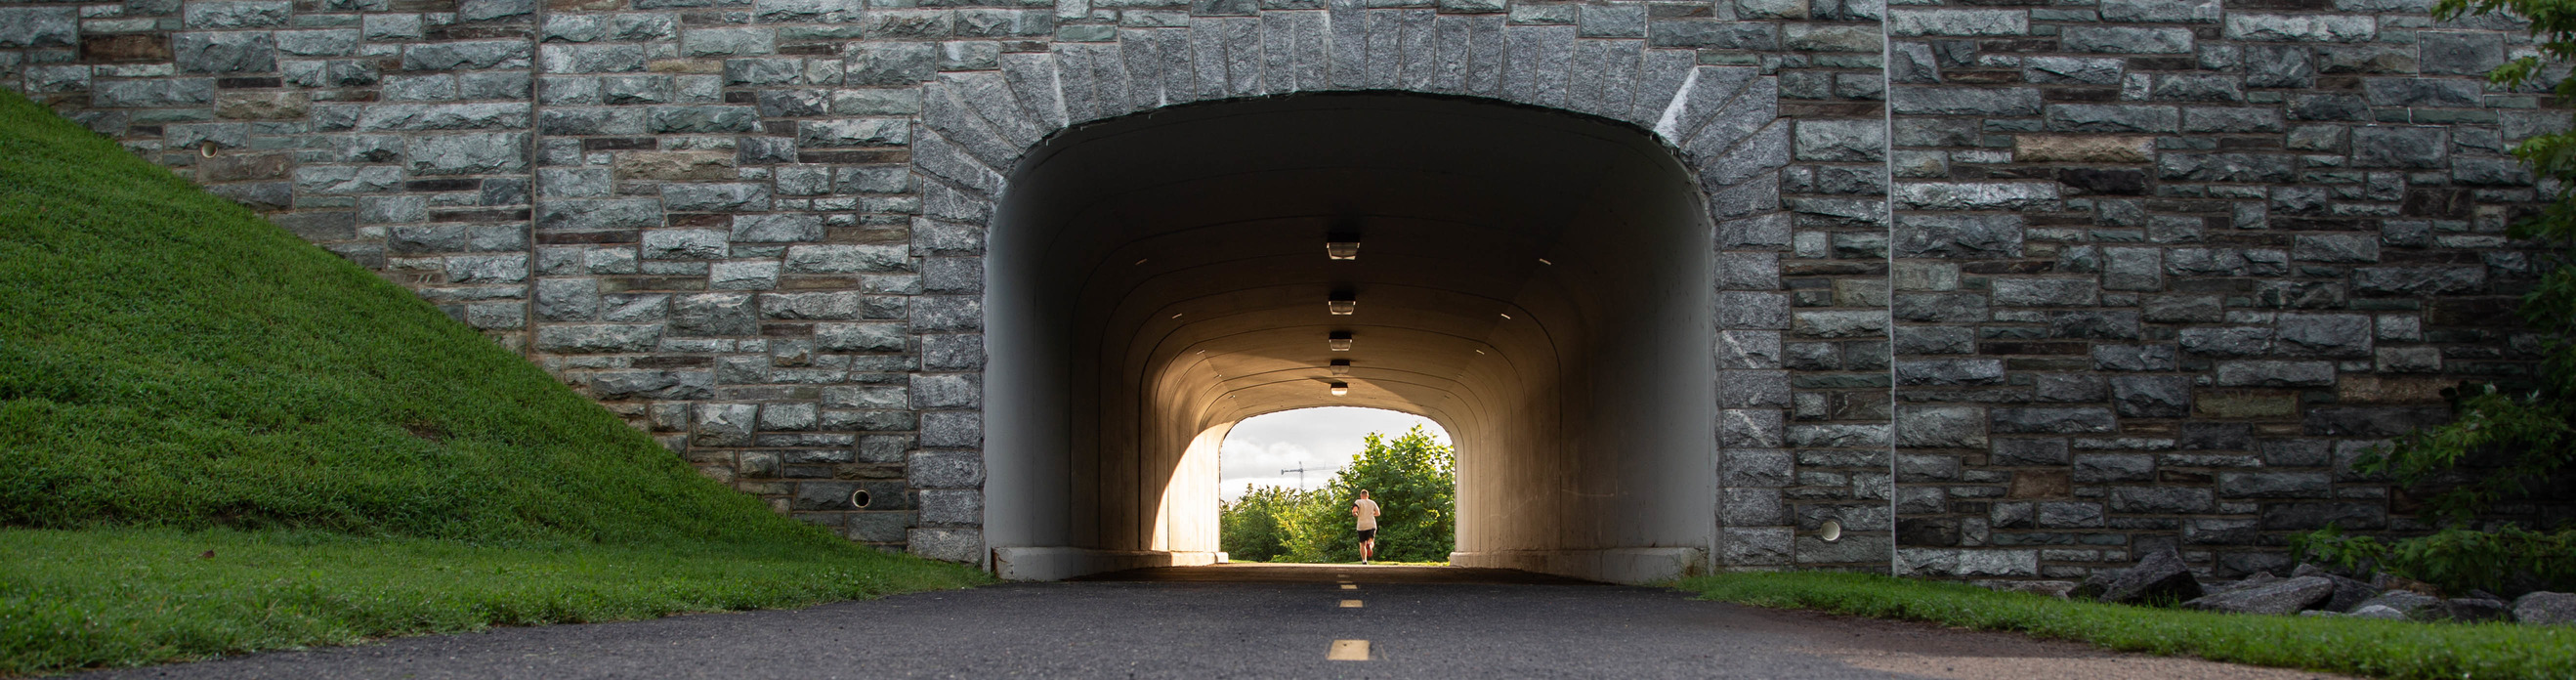 Jogger under a stone bridge